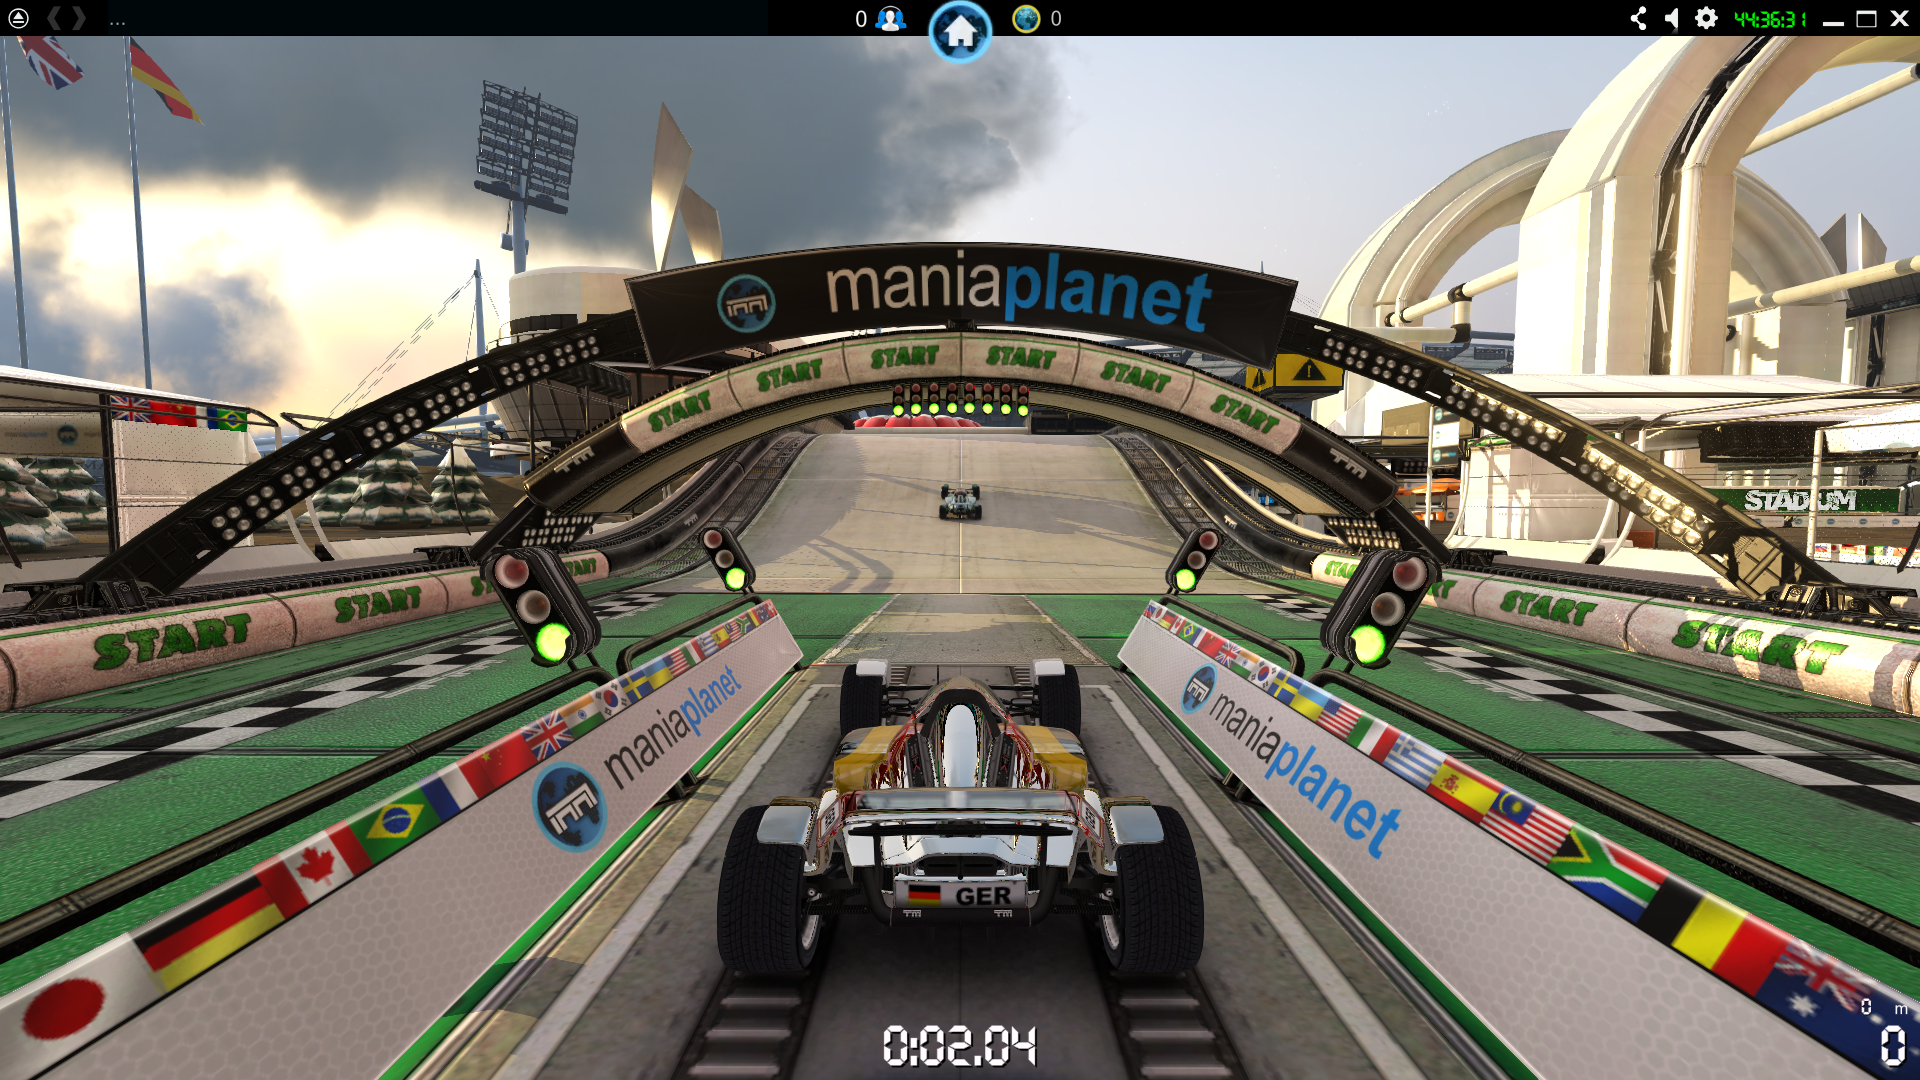 trackmania 2 stadium free download full version